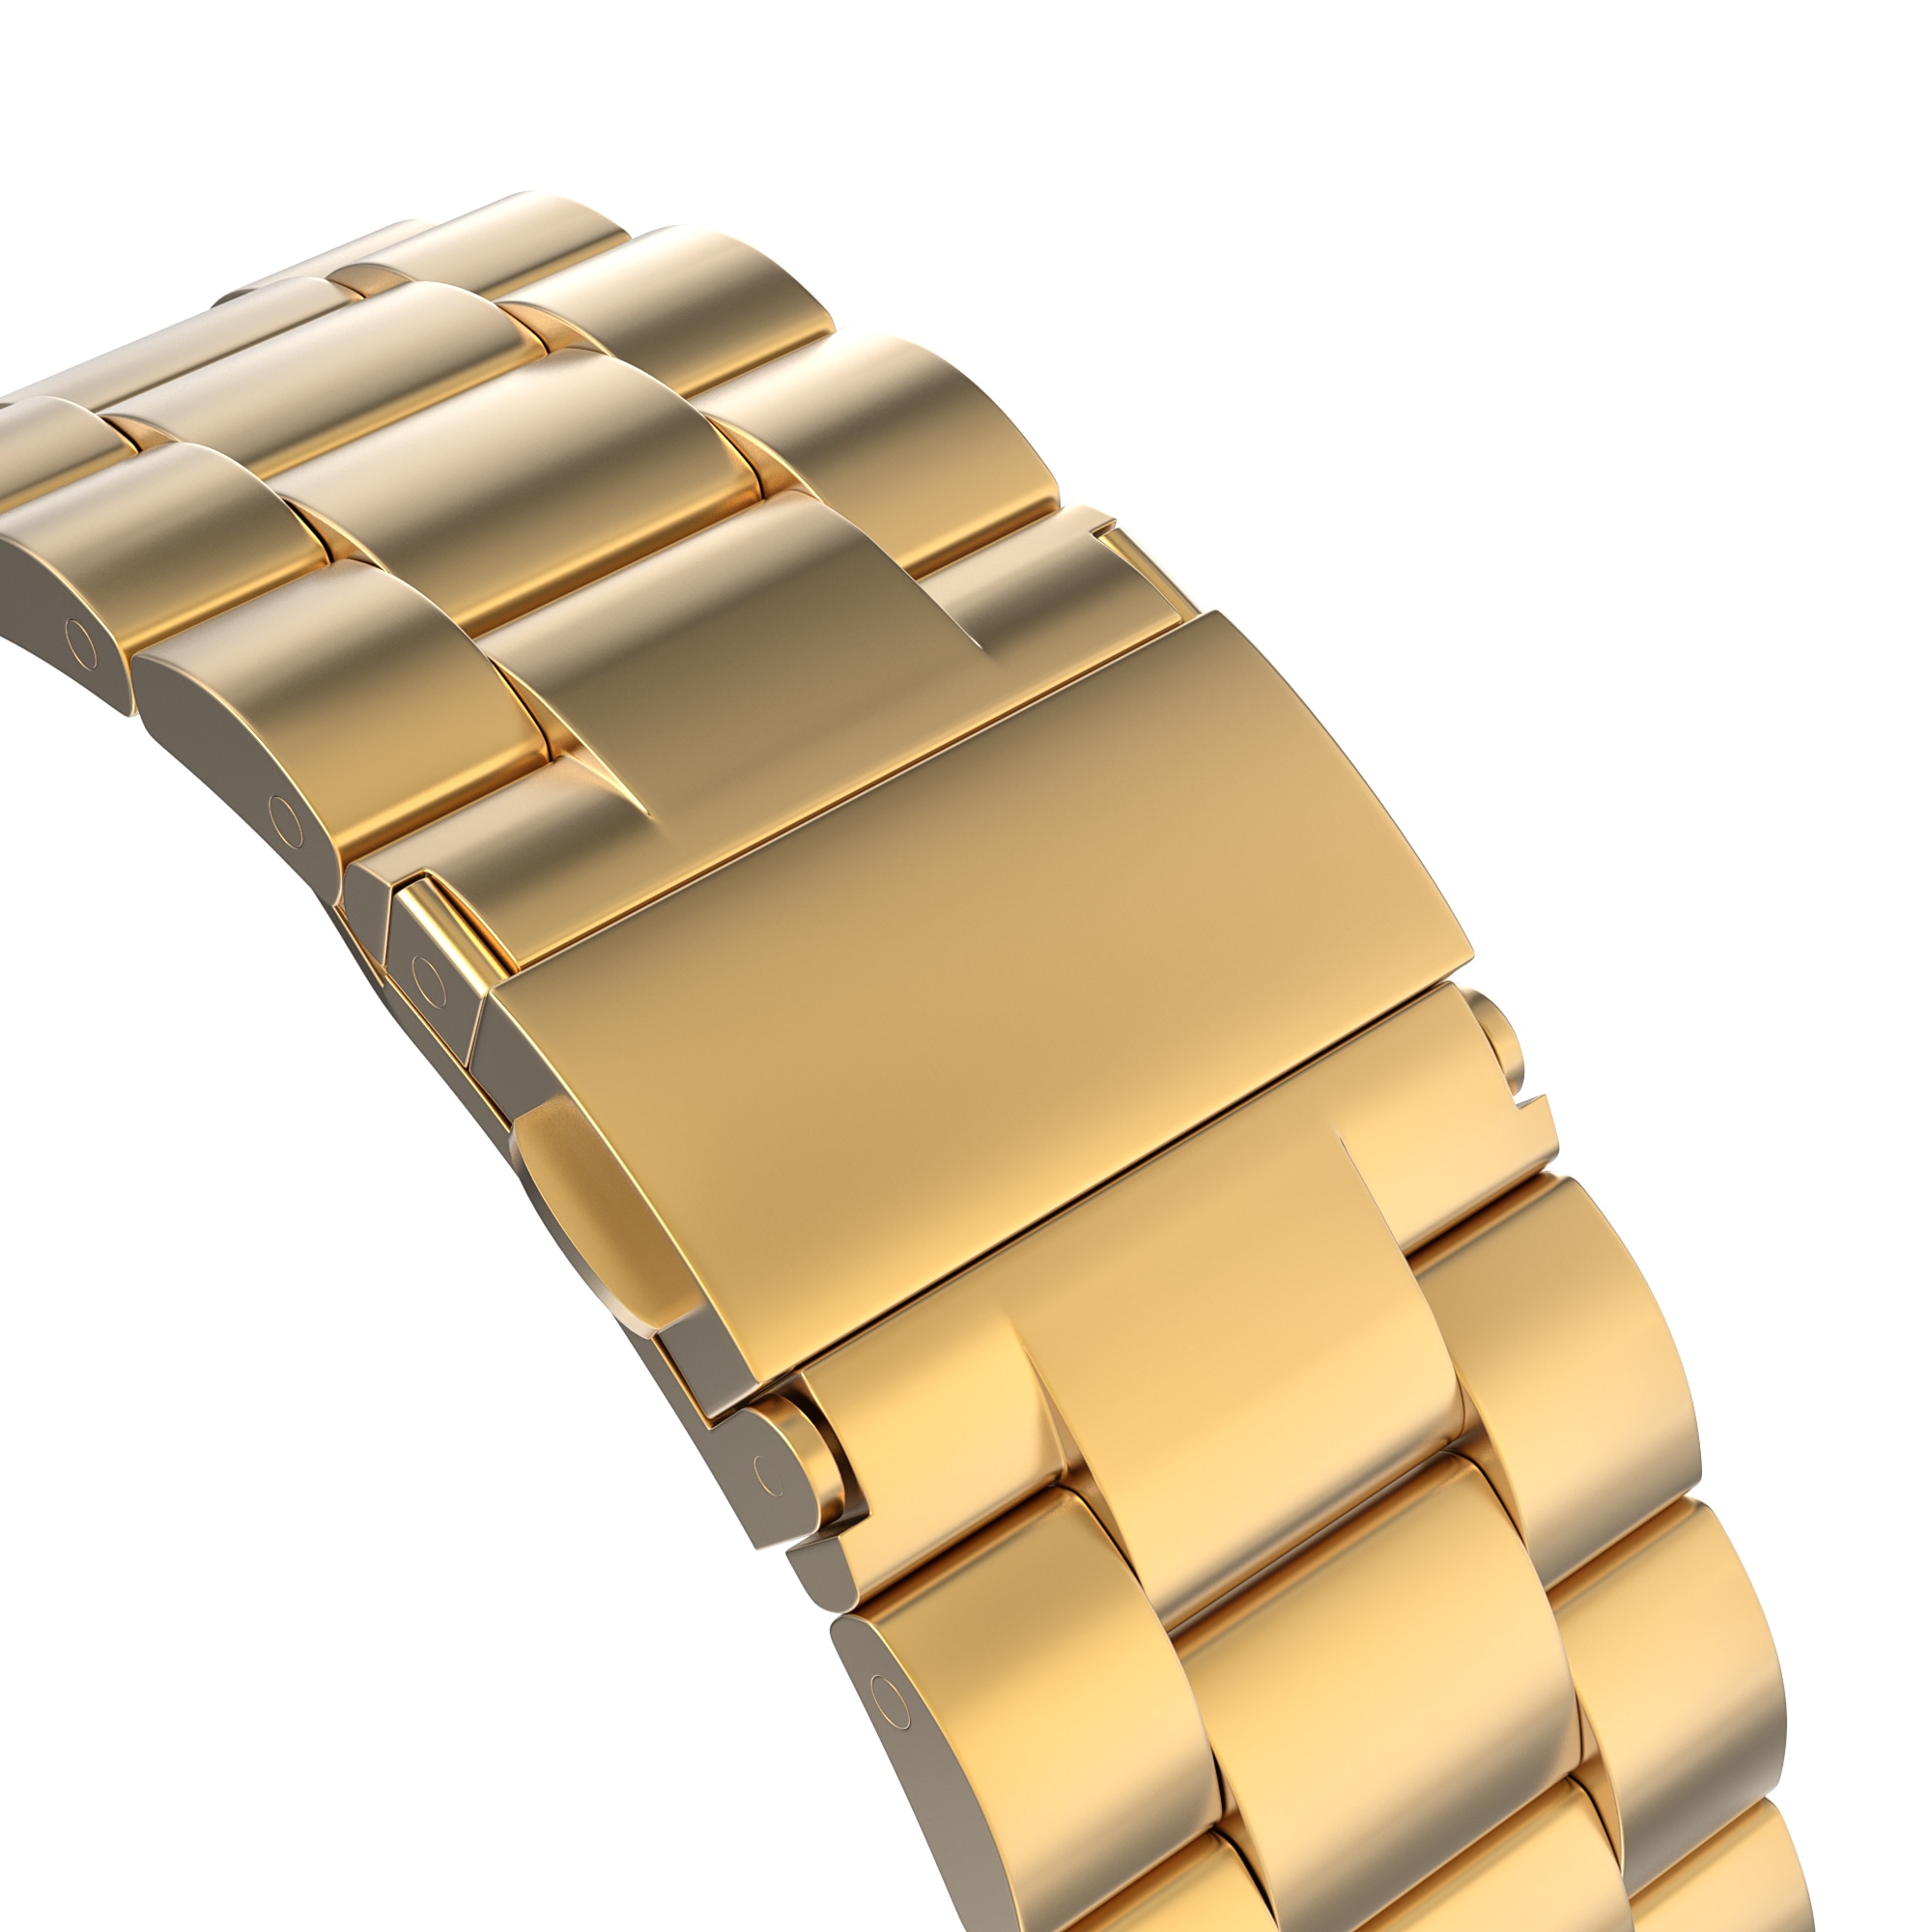 Apple Watch SE 40mm Armband aus Stahl gold